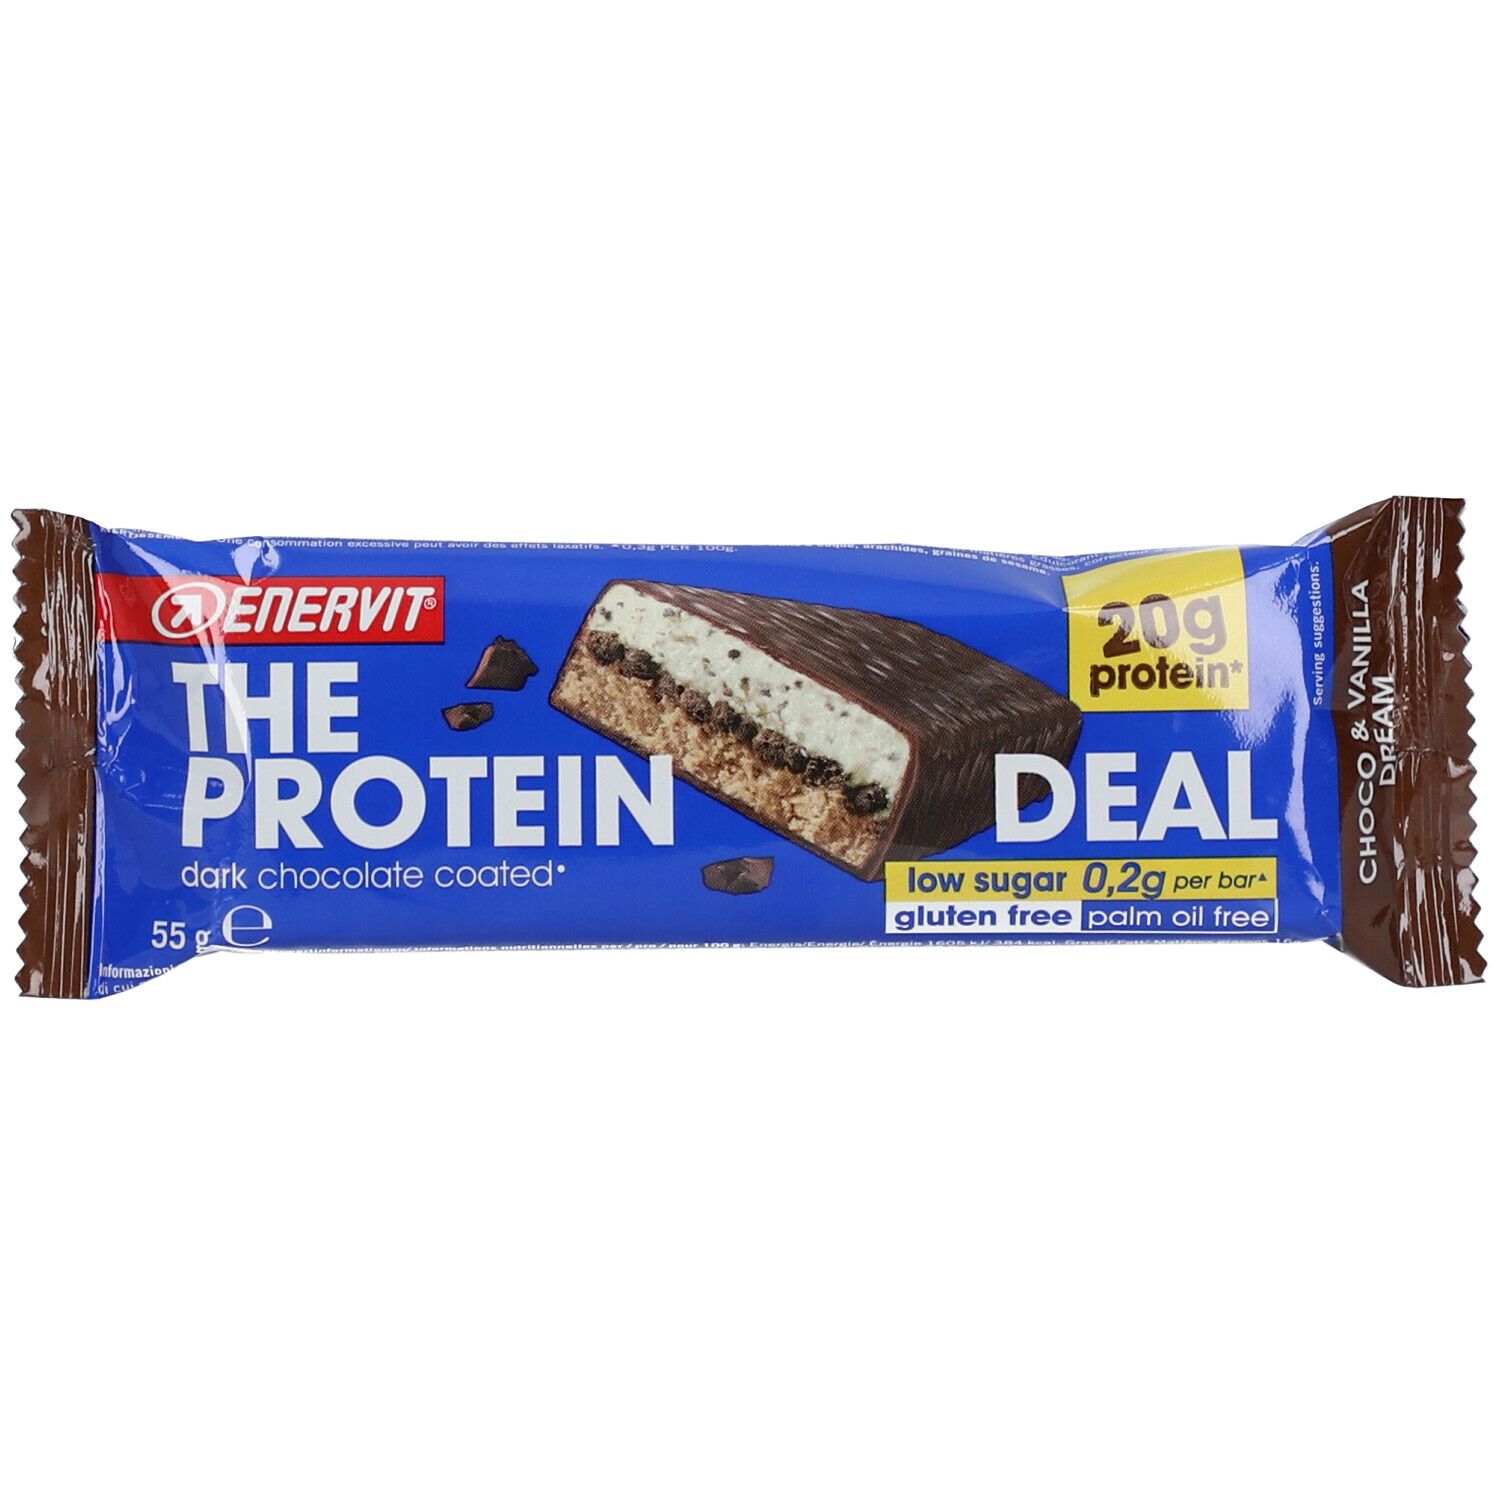 Enervit THE Protein Deal Choco & Vanilla Dream